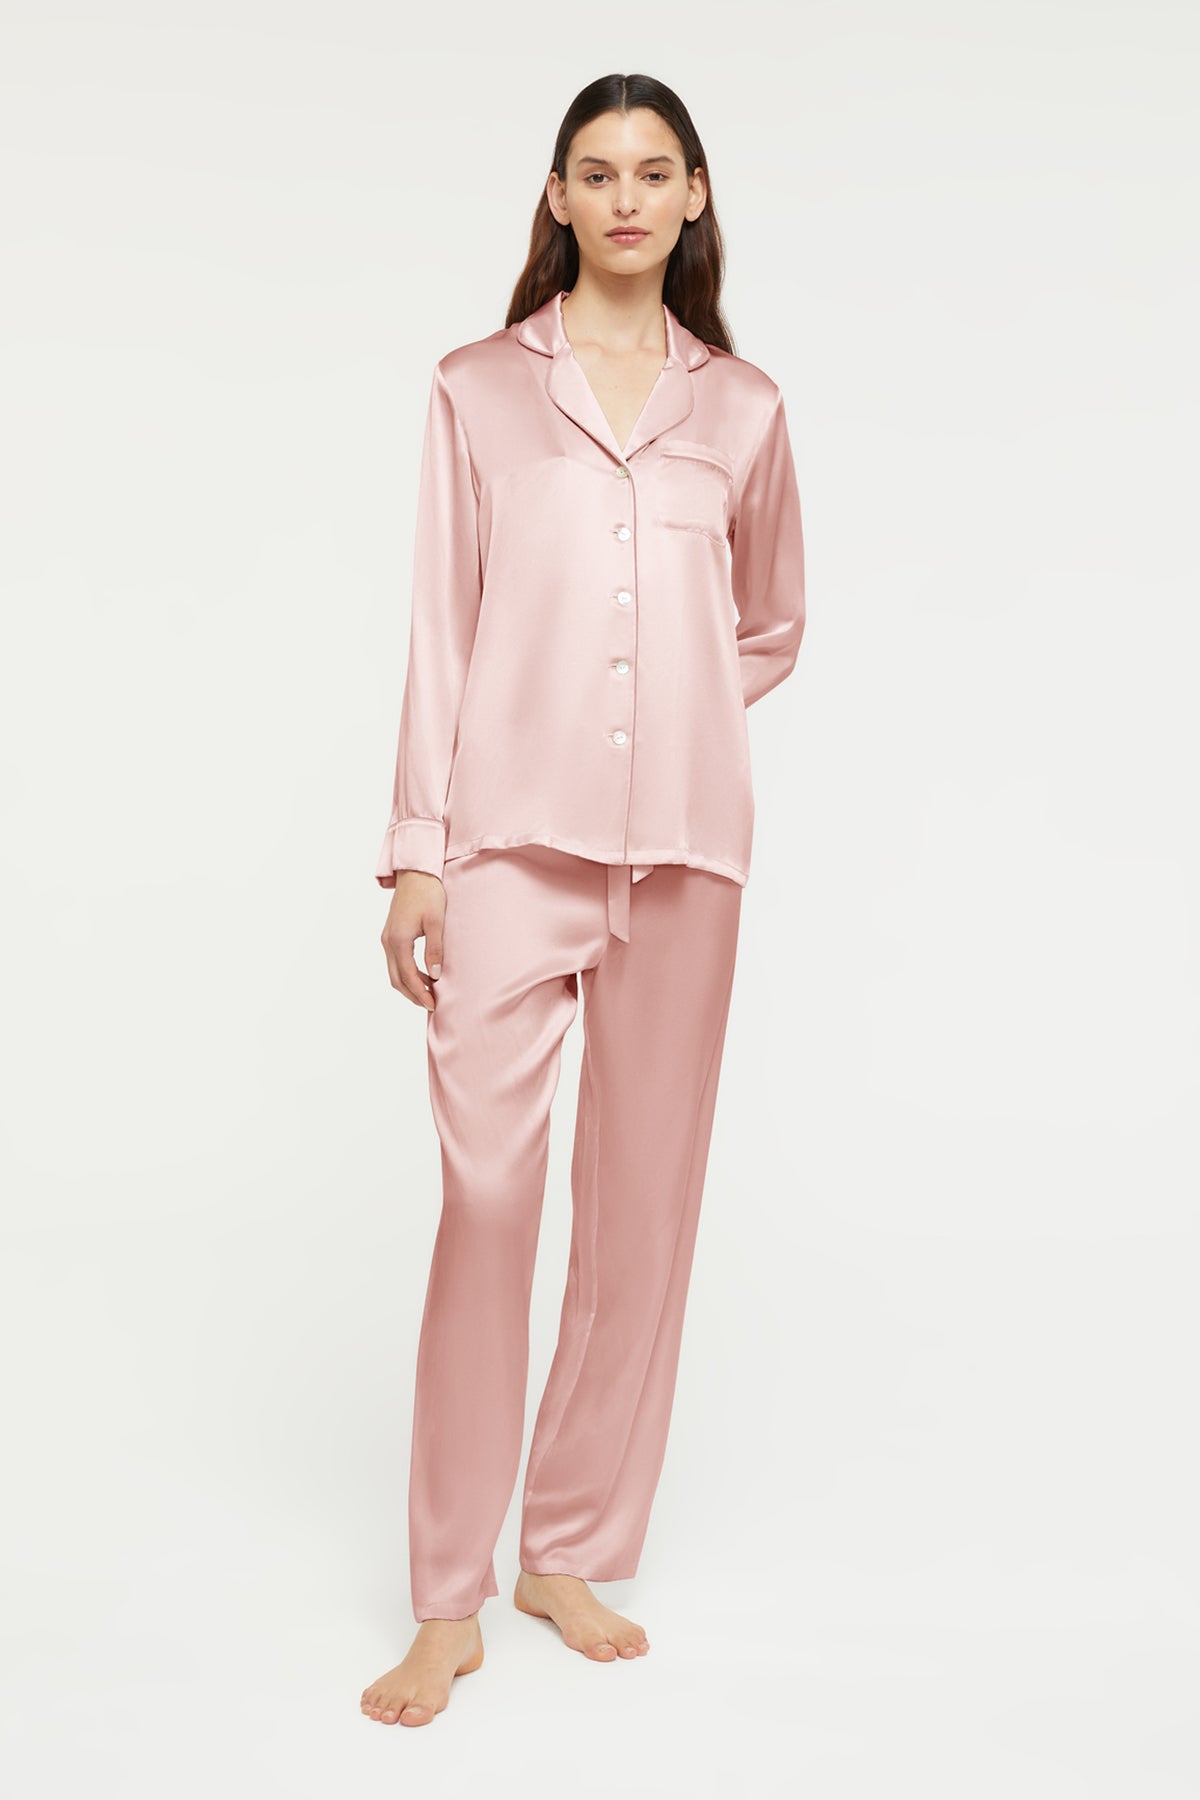 Fine Finishes Pyjama in Bridal Rose with 100% Silk from Ginia Sleepwear